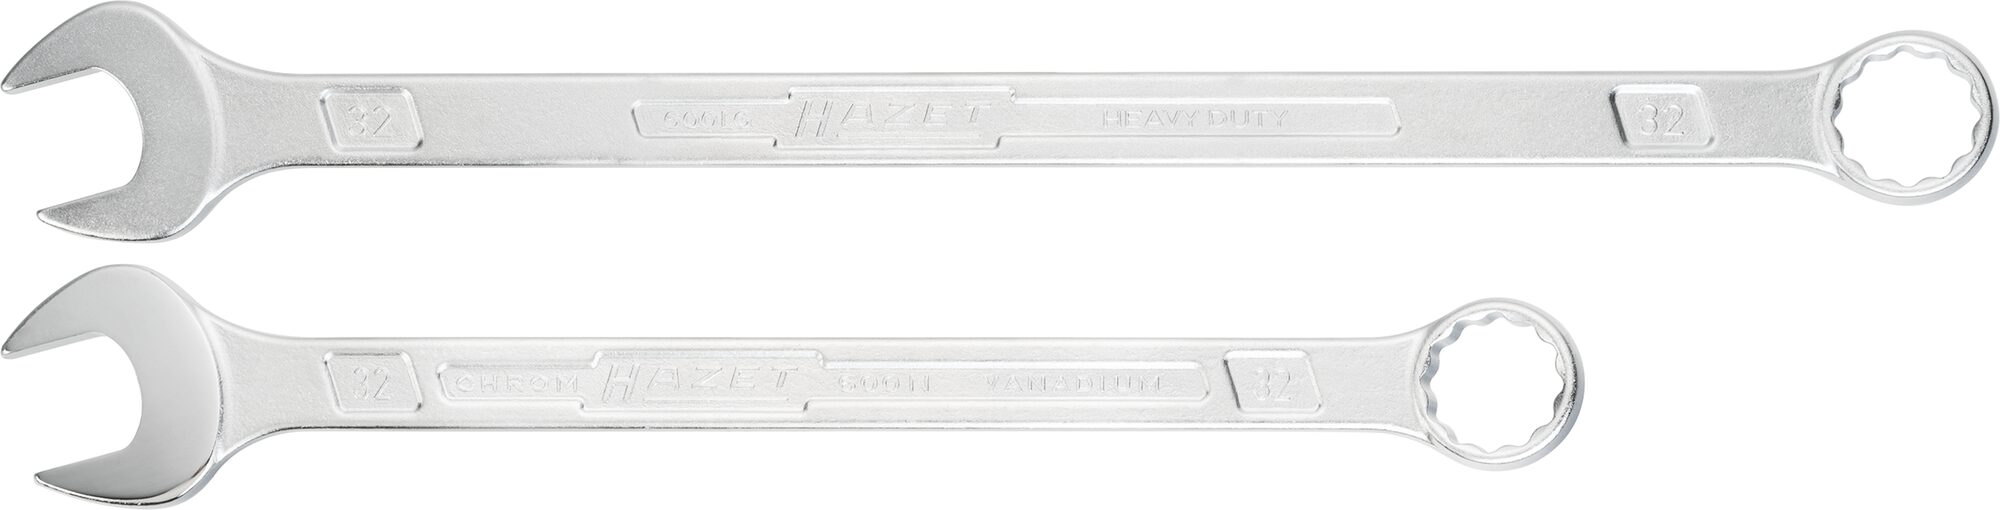 HAZET Ring-Maulschlüssel · extra lang · schlanke Bauform 600LG-41 · Außen Doppel-Sechskant-Tractionsprofil · 41 mm